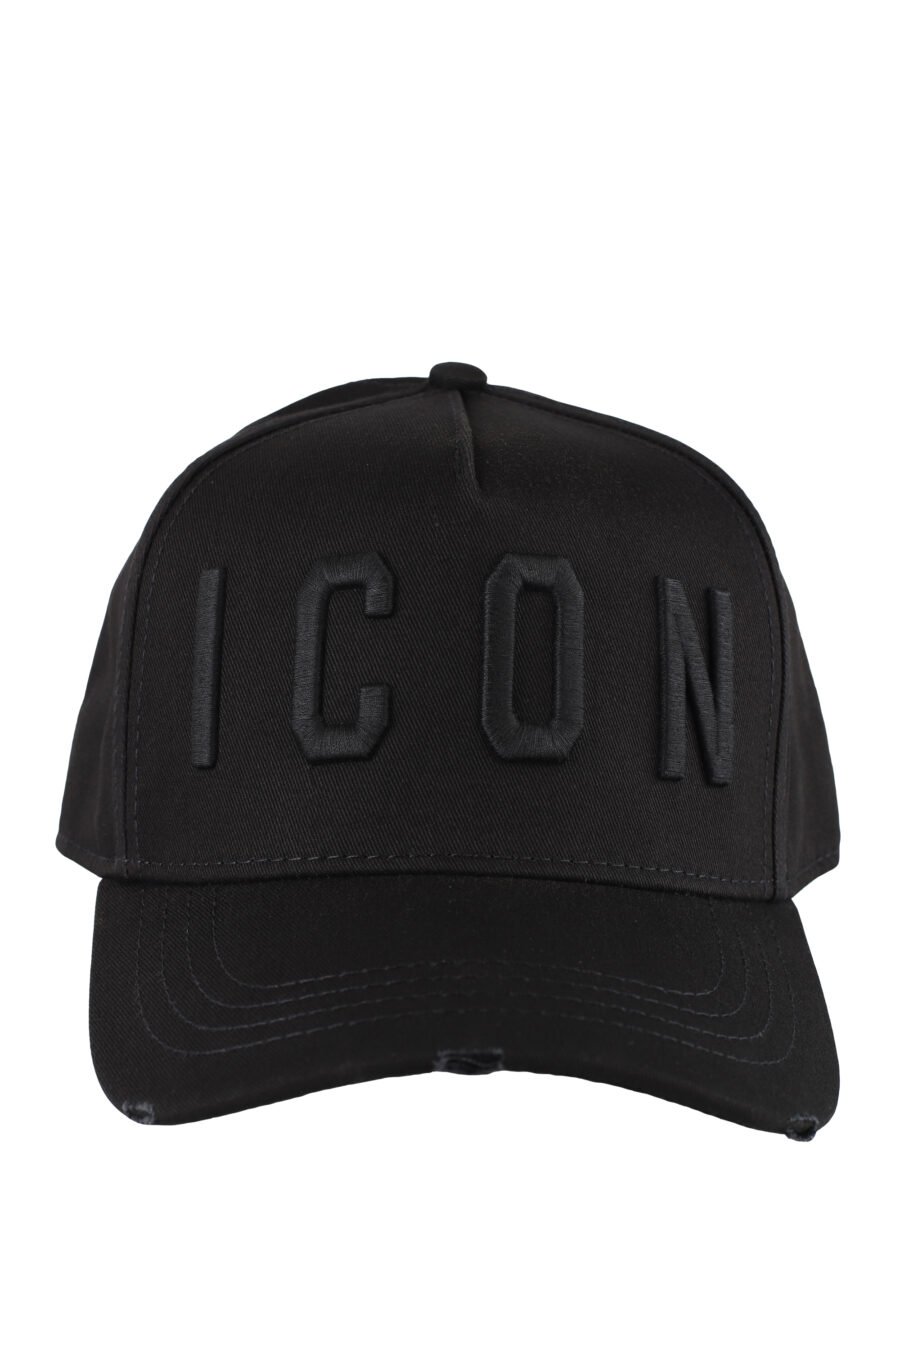 Black cap with monochrome "icon" logo - IMG 5164